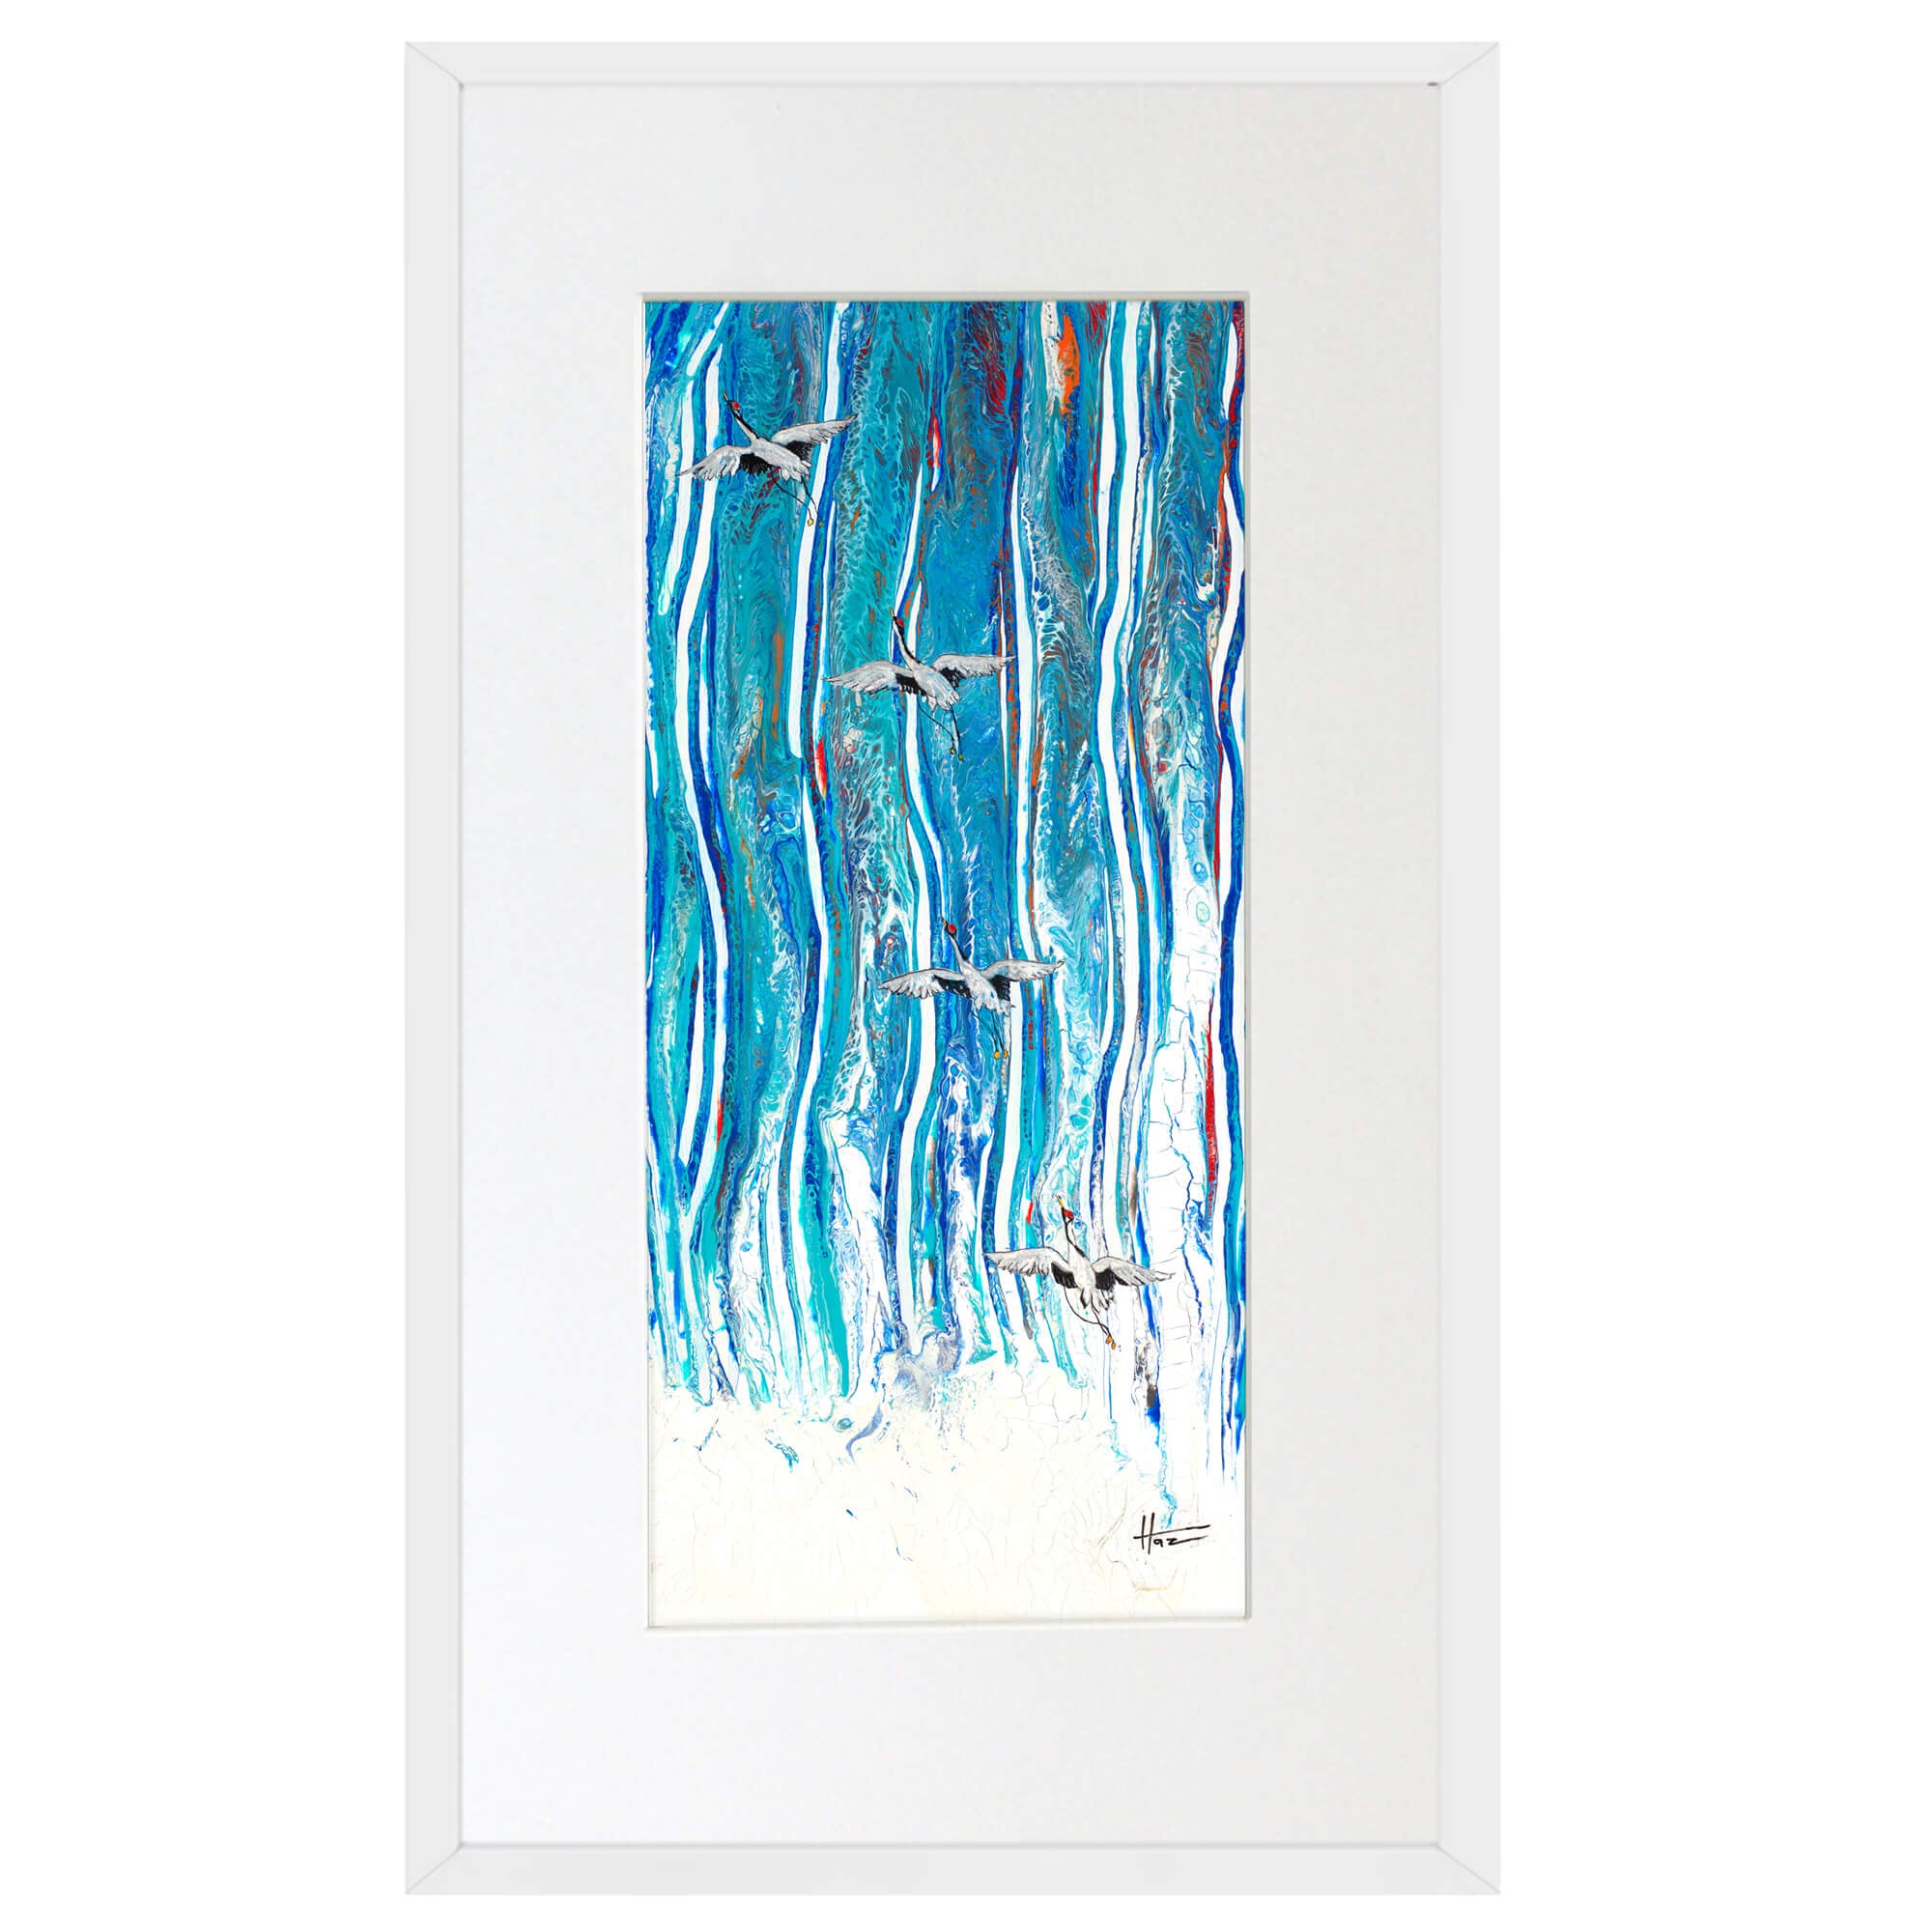 Matted art print with white frame showcasing a graceful crane in flight by hawaii artist Robert Hazzard